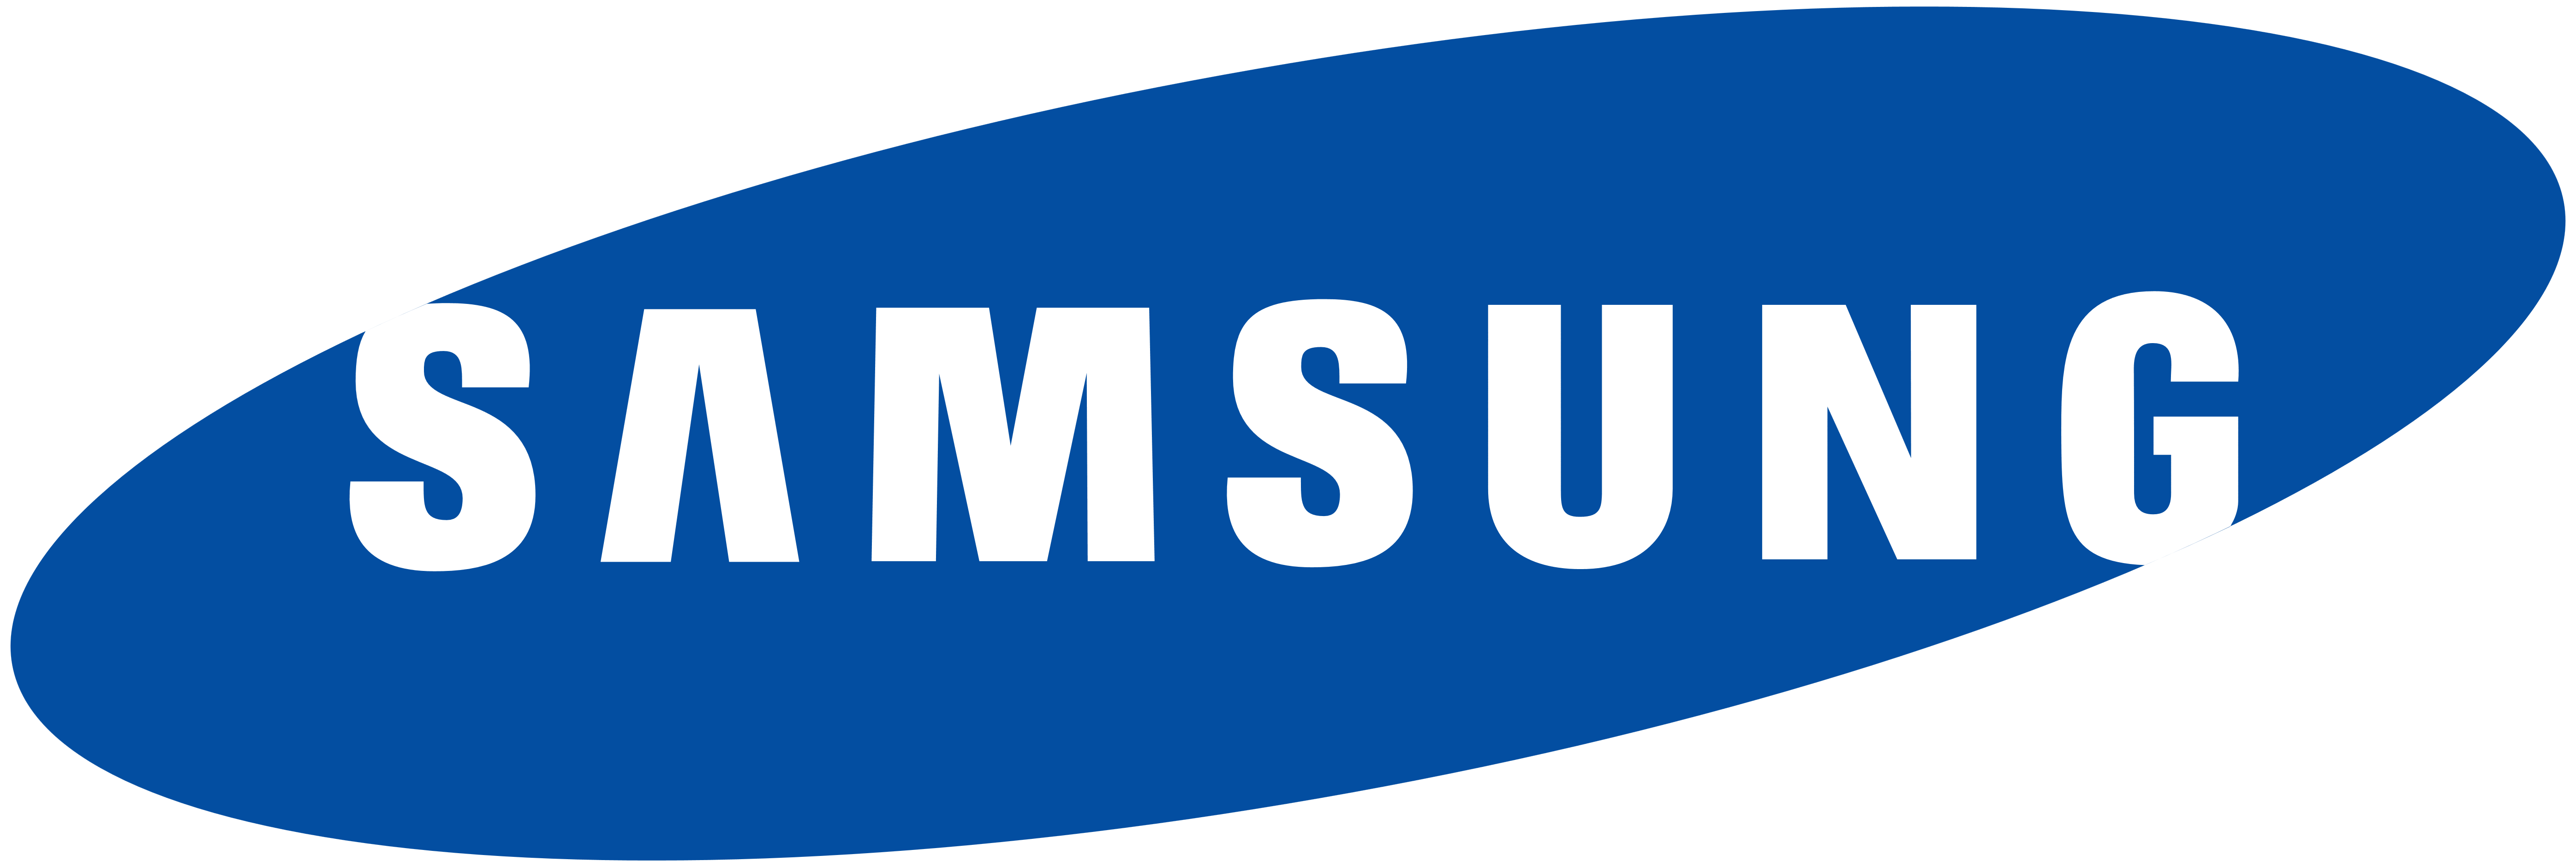 Samsung_logo